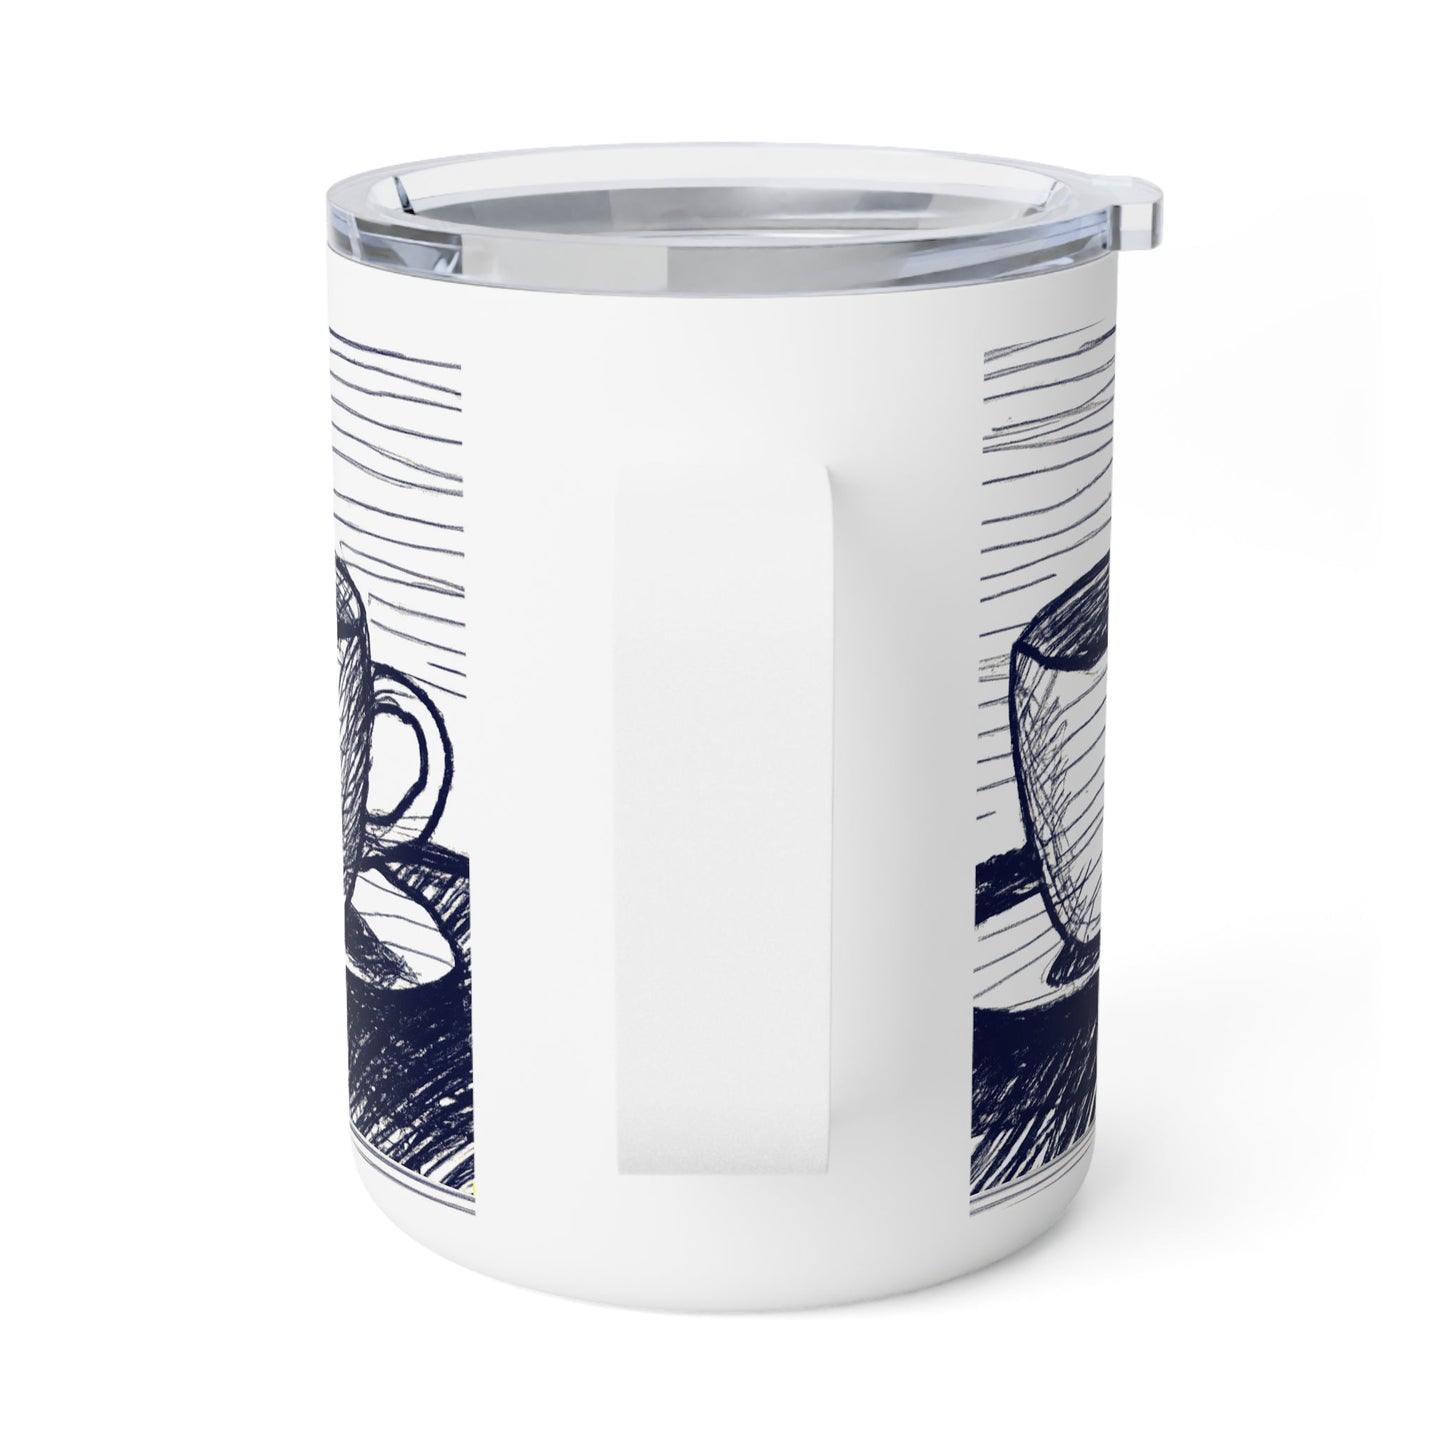 Double Shot of coffee  Insulated Coffee Mug, 10oz-Shalav5